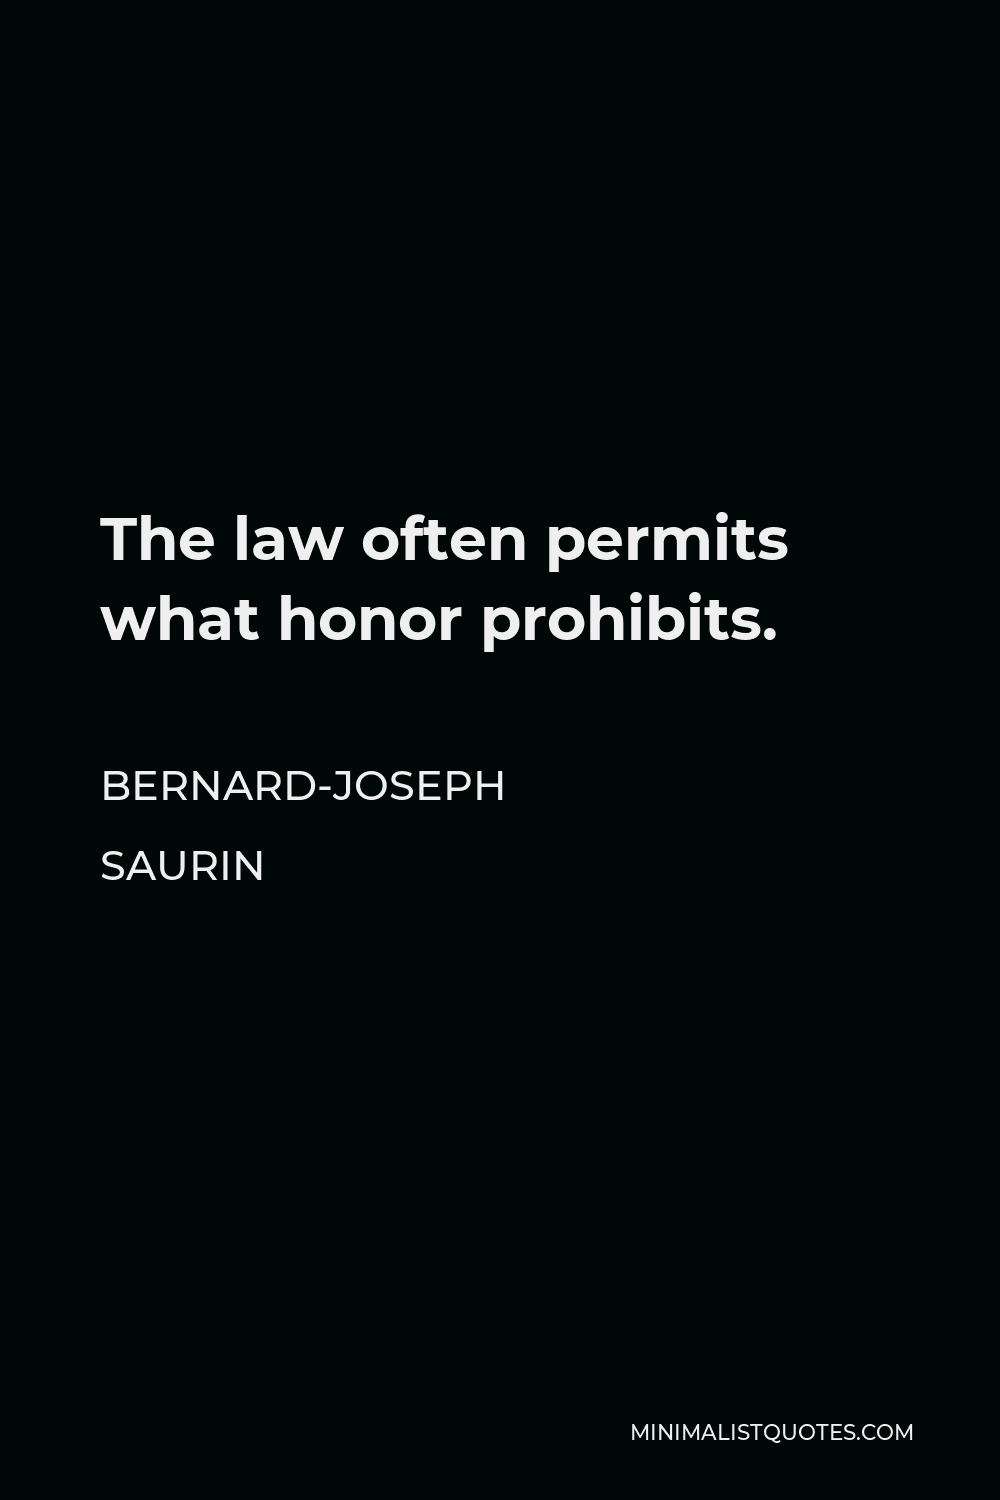 Bernard-Joseph Saurin Quote - The law often permits what honor prohibits.